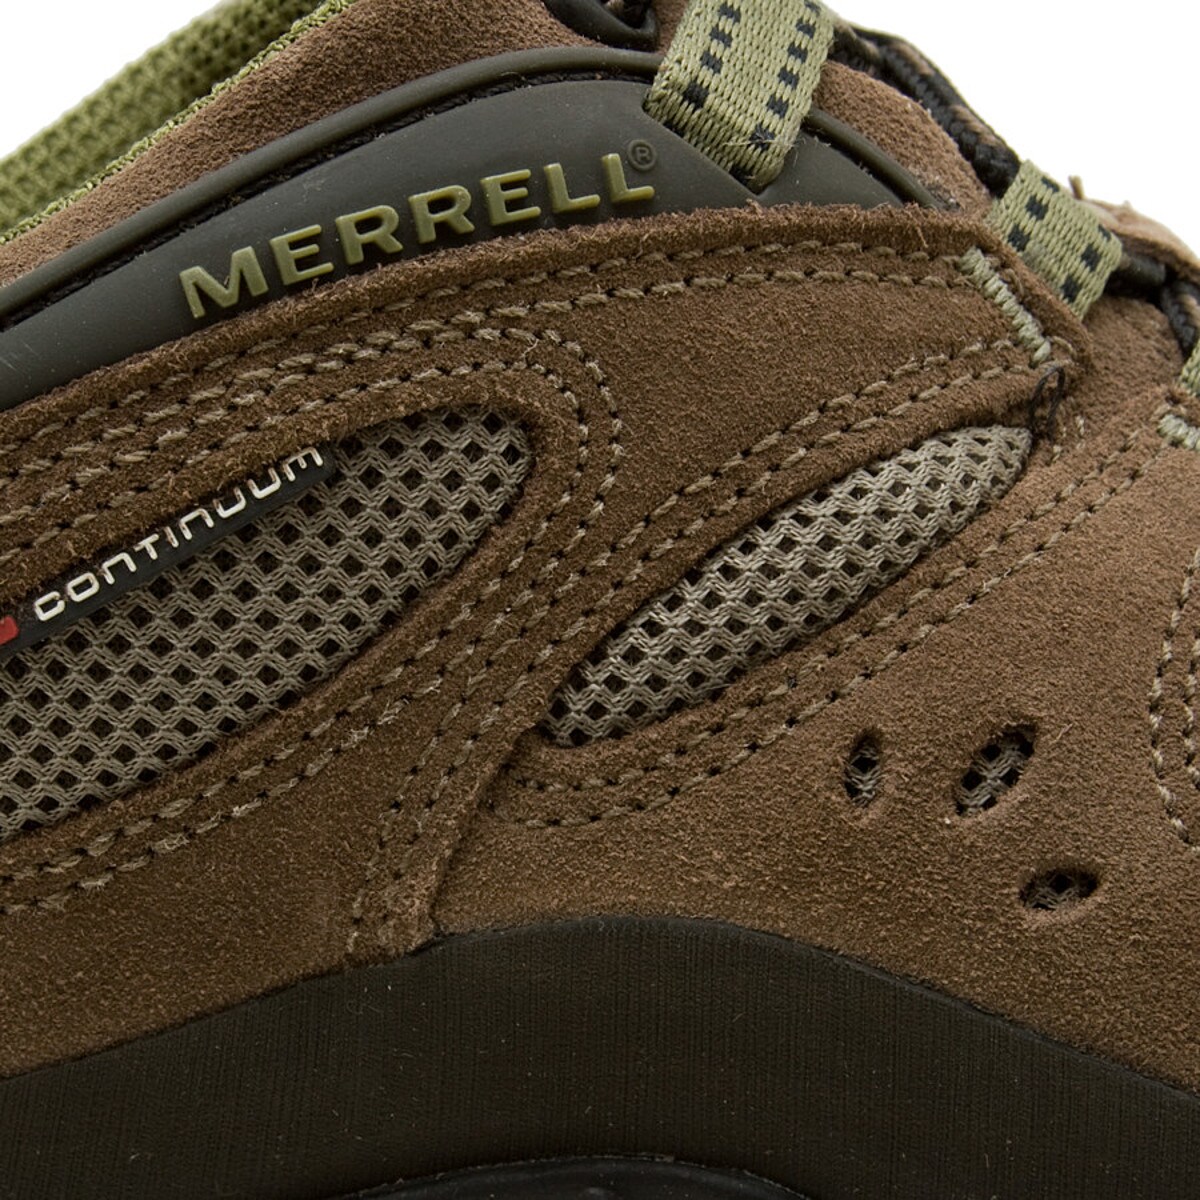 Merrell Chameleon Arc GTX Shoe - Women's - Footwear